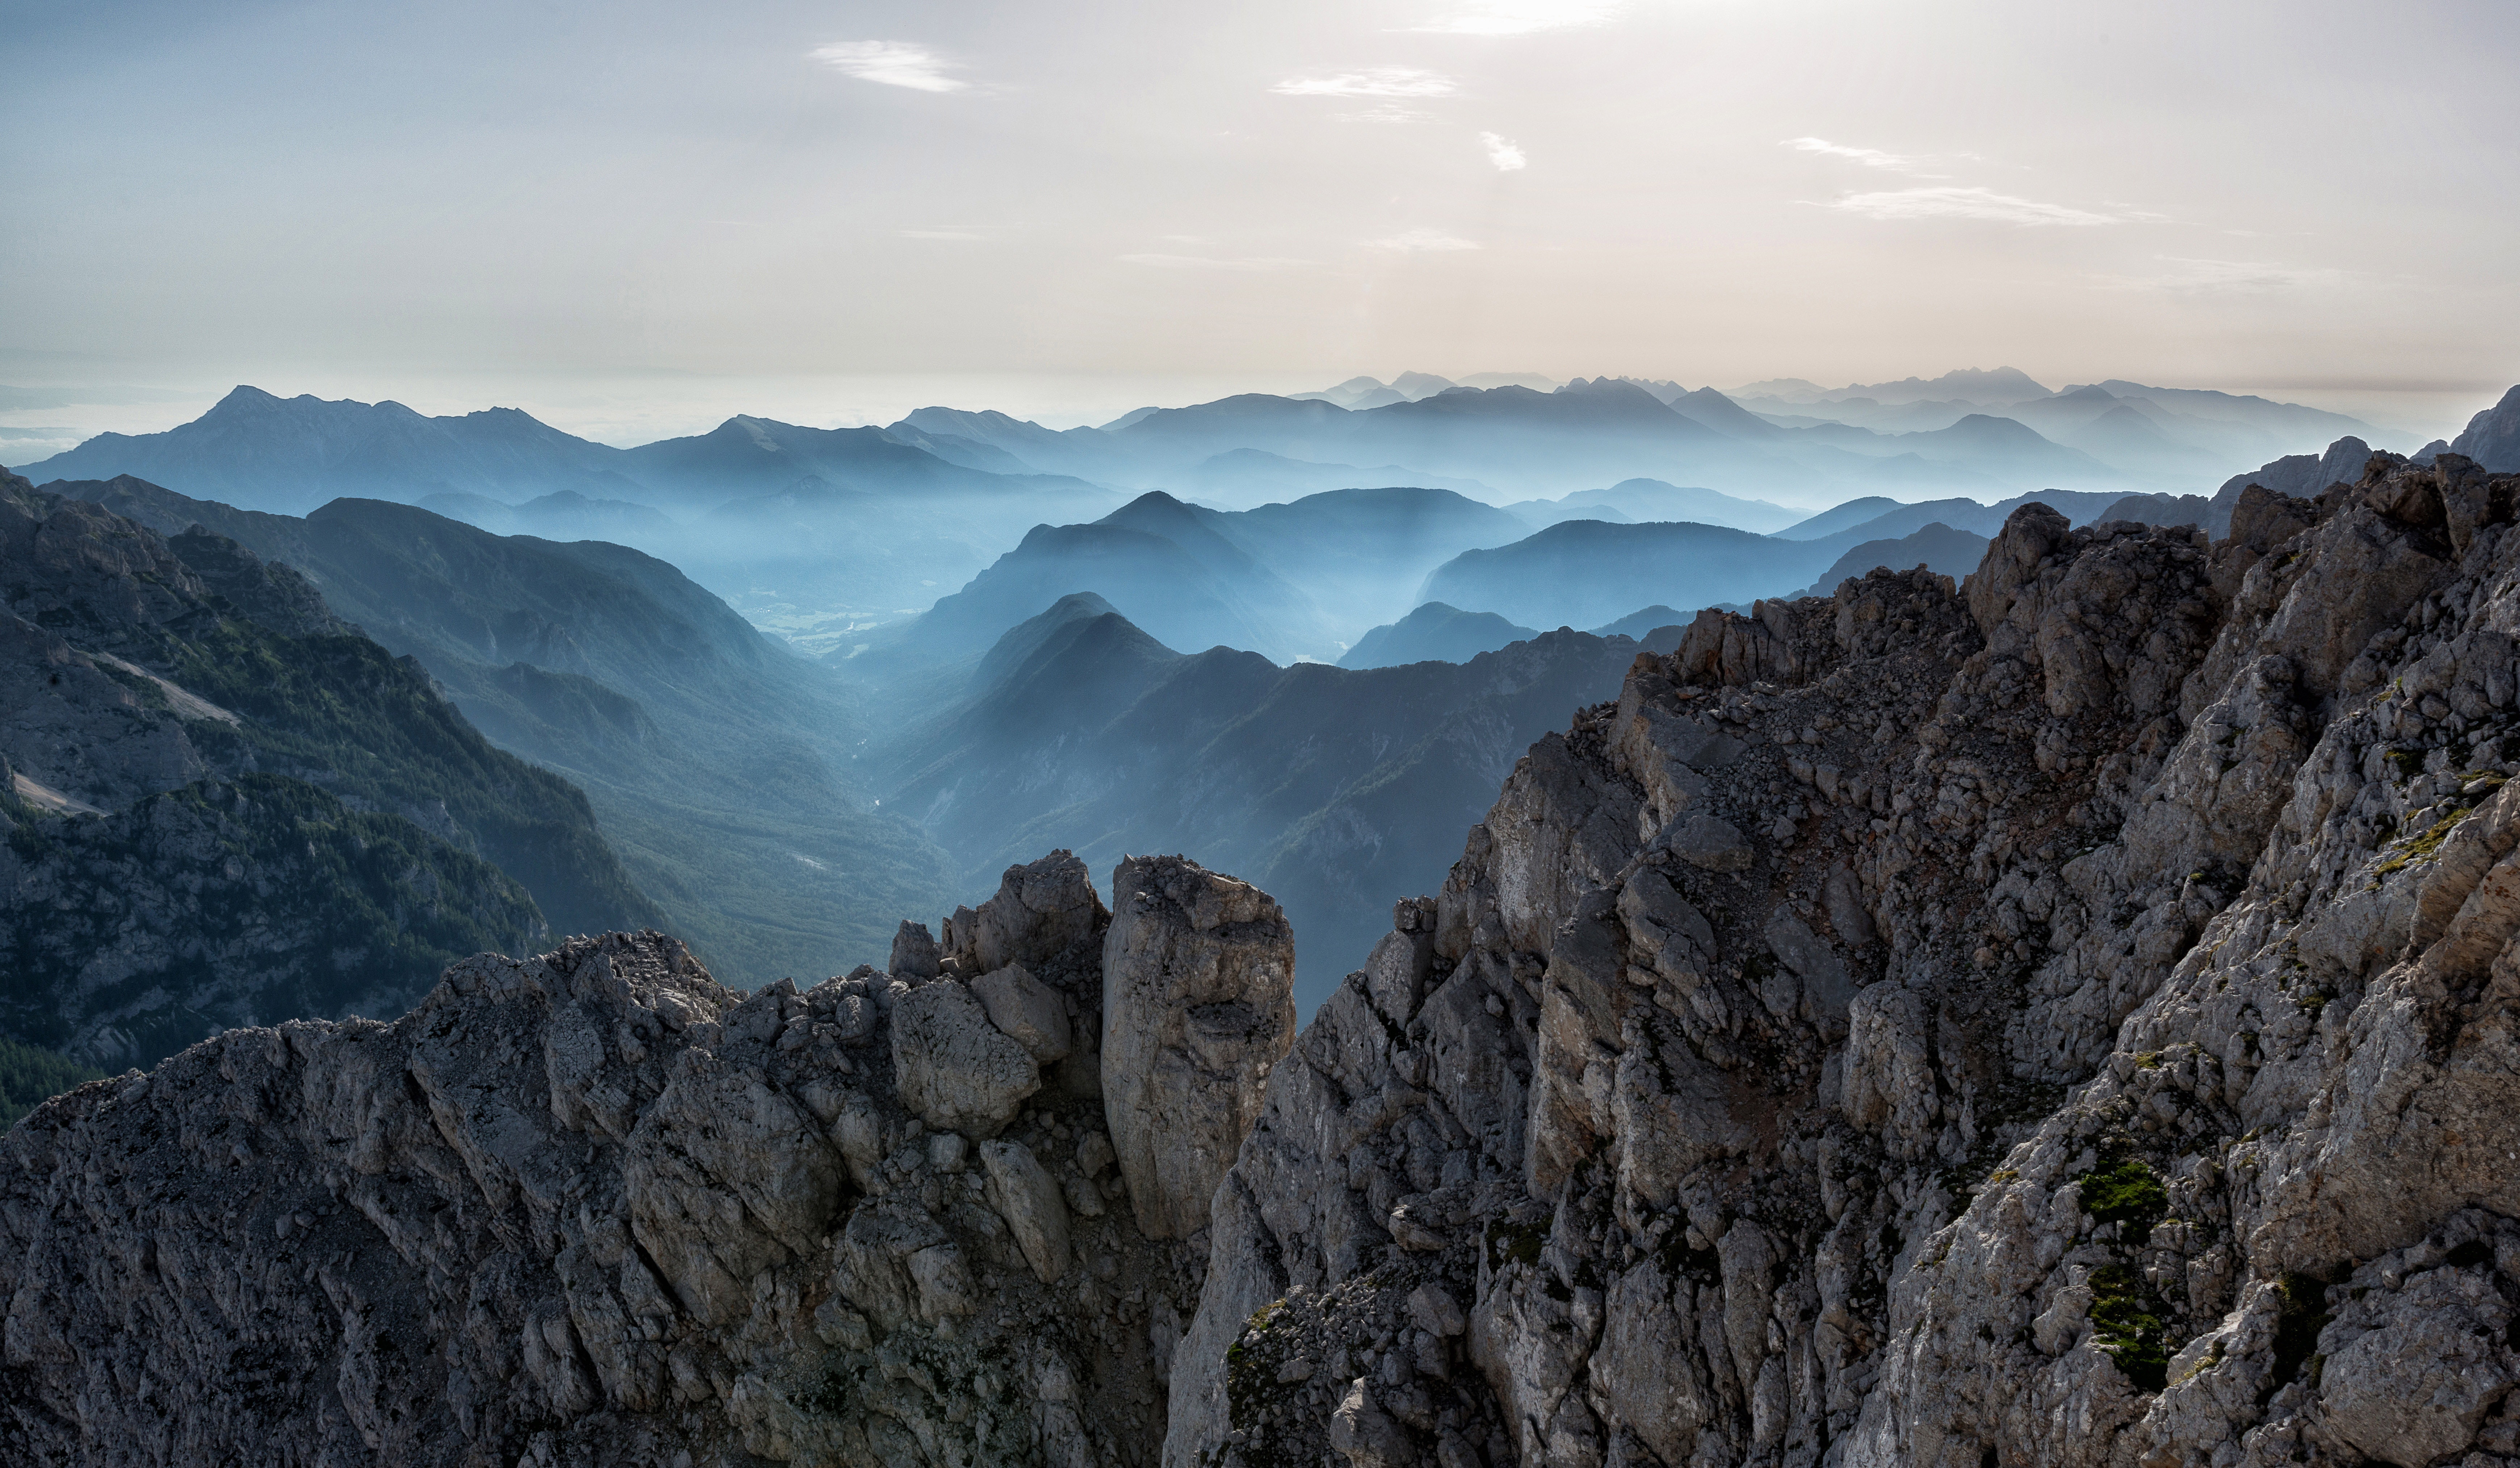 1000+ Beautiful Mountains Photos · Pexels · Free Stock Photos